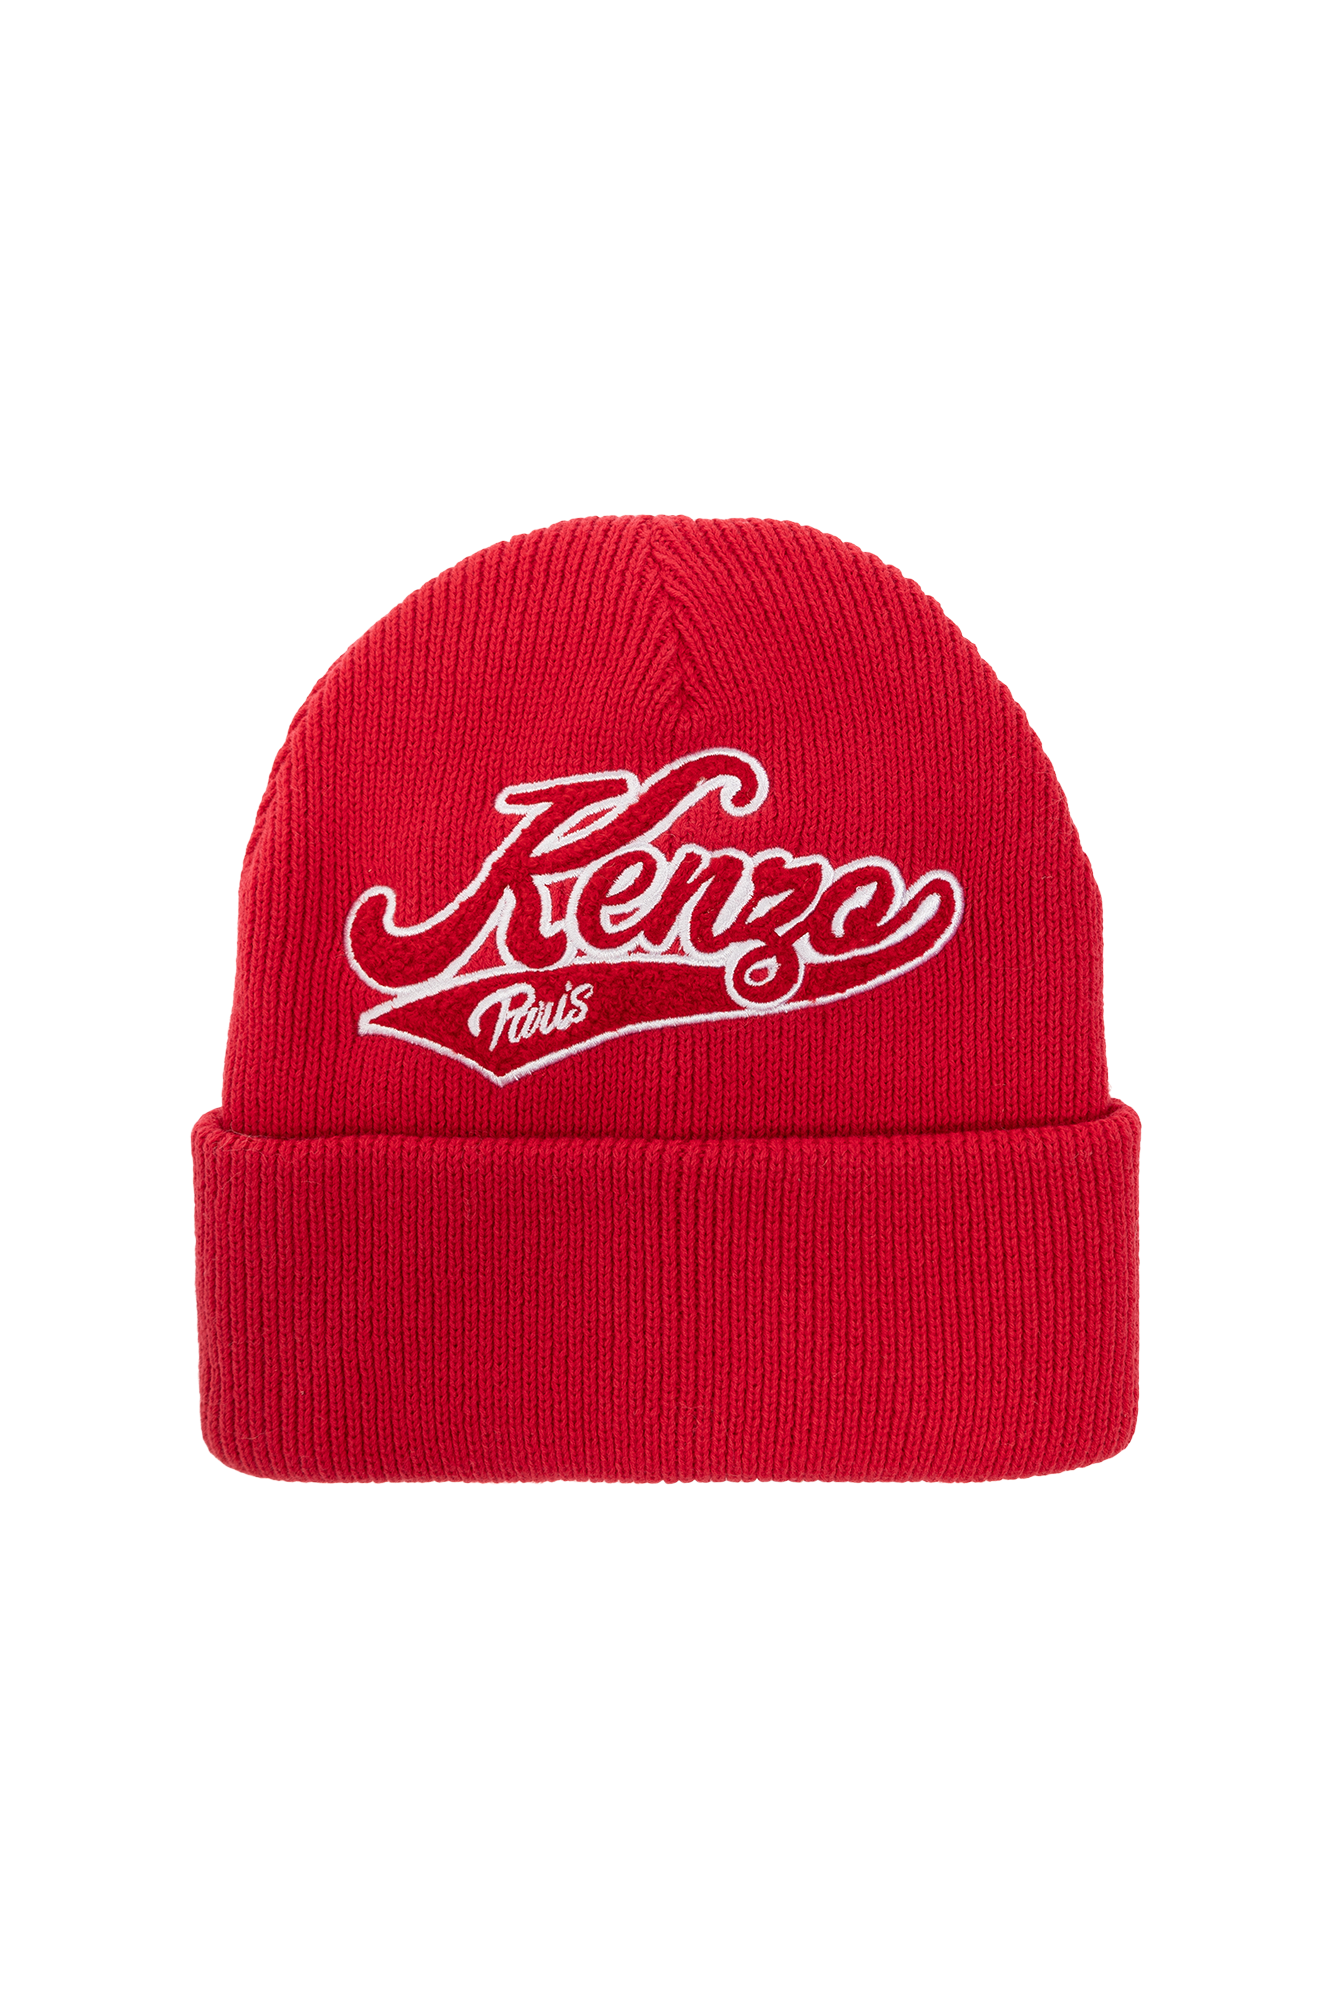 Kenzo Kids adidas Originals small logo adjustable cap in pastel wash